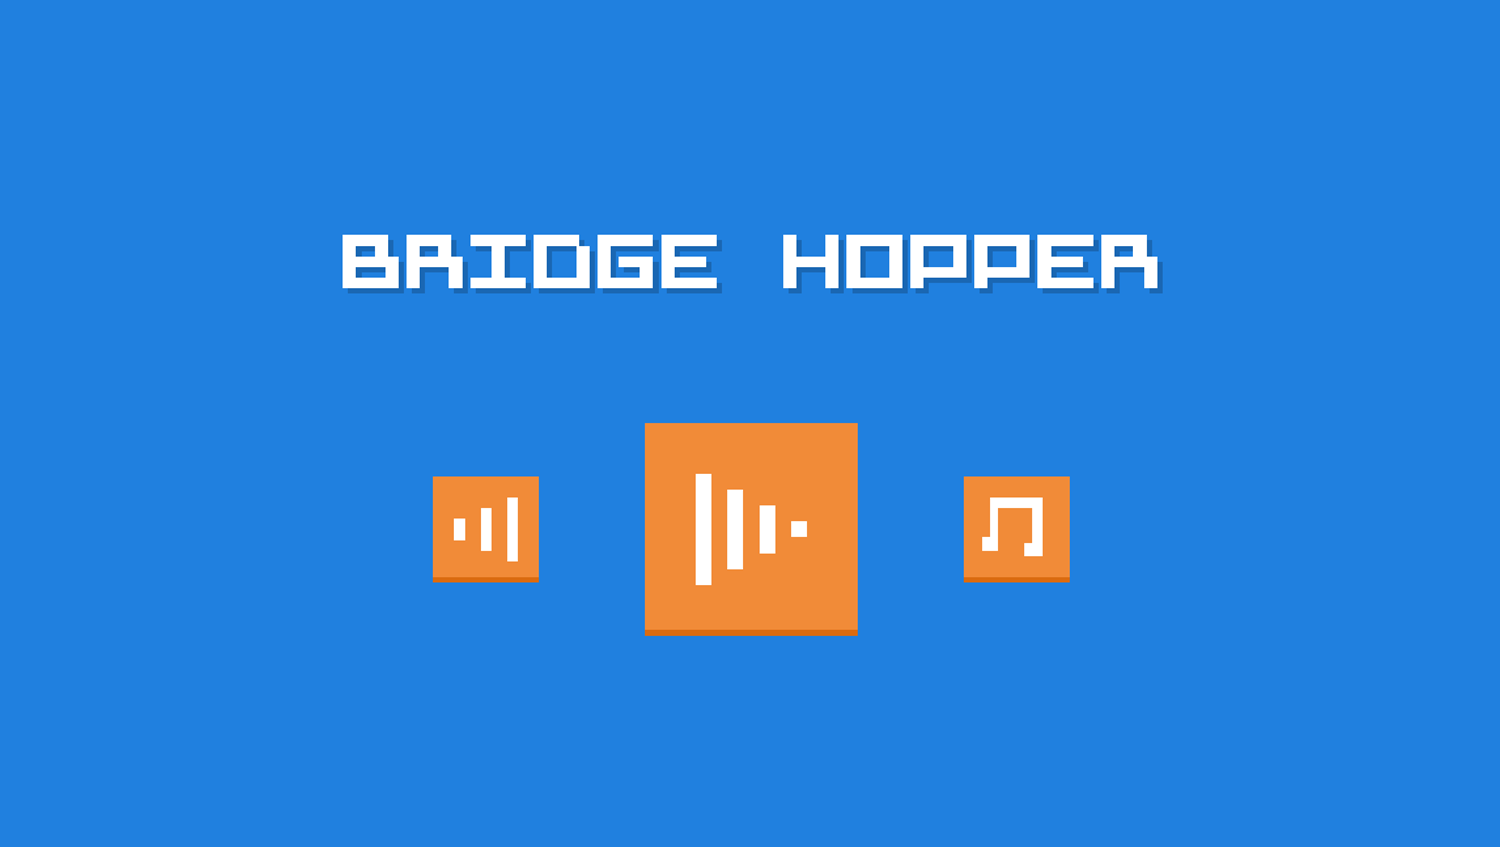 Bridge Hopper Game Welcome Screen Screenshot.